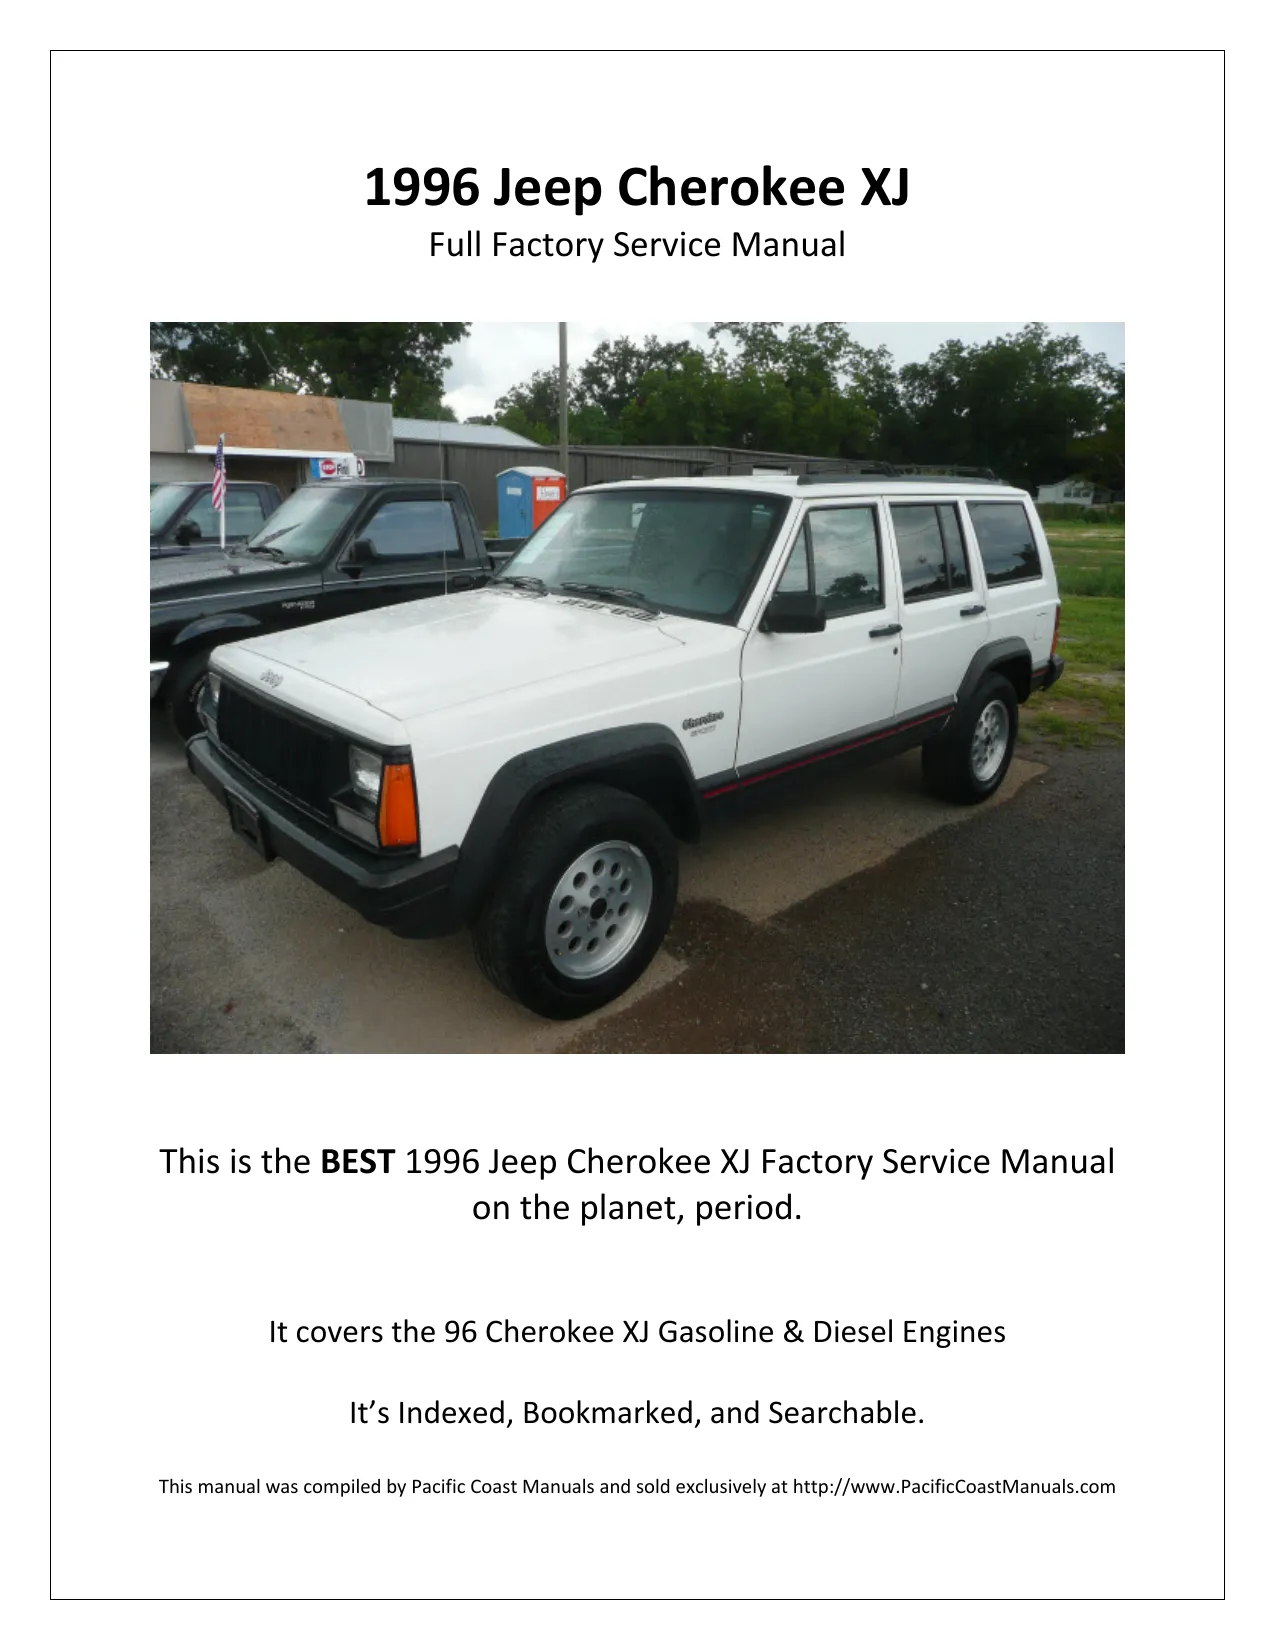 1996 Jeep Cherokee XJ repair manual